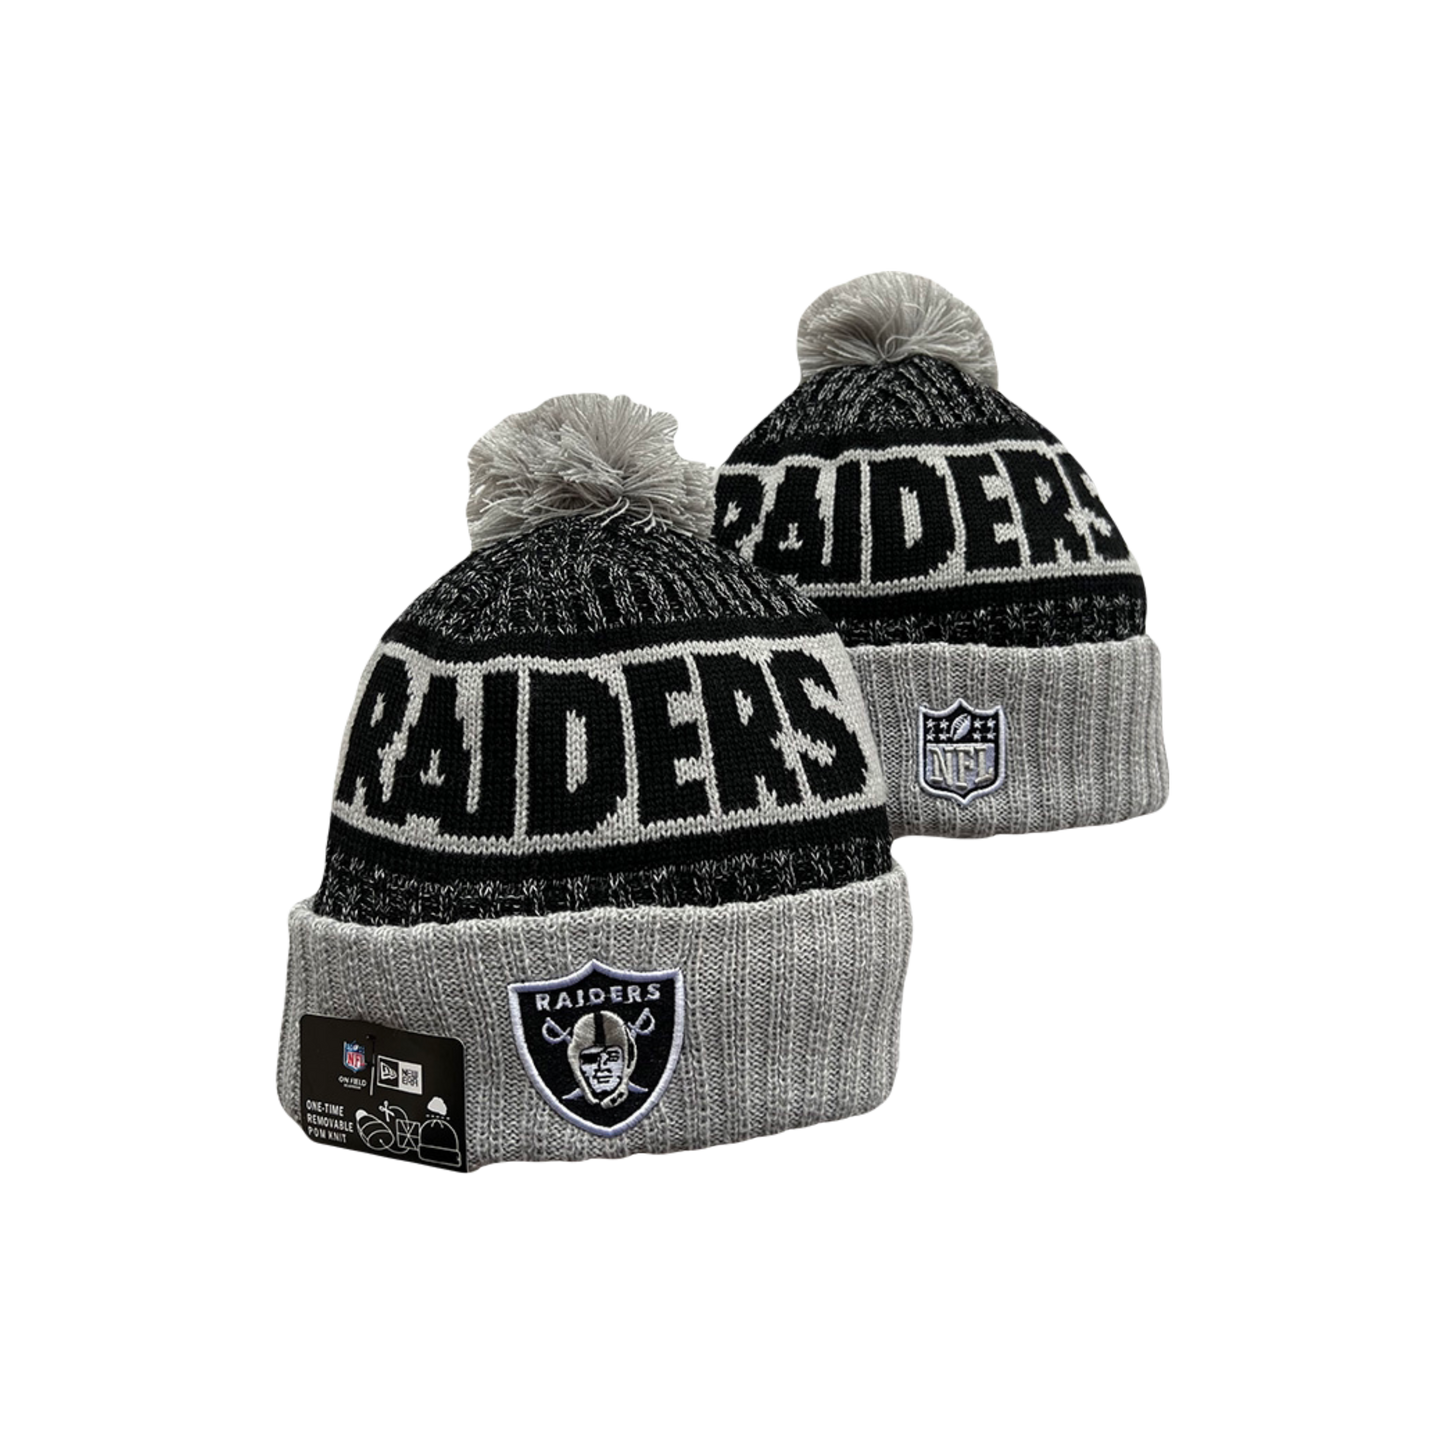 Las Vegas Raiders ‘Silver & Black Attack’ NFL New Era Knit Beanie